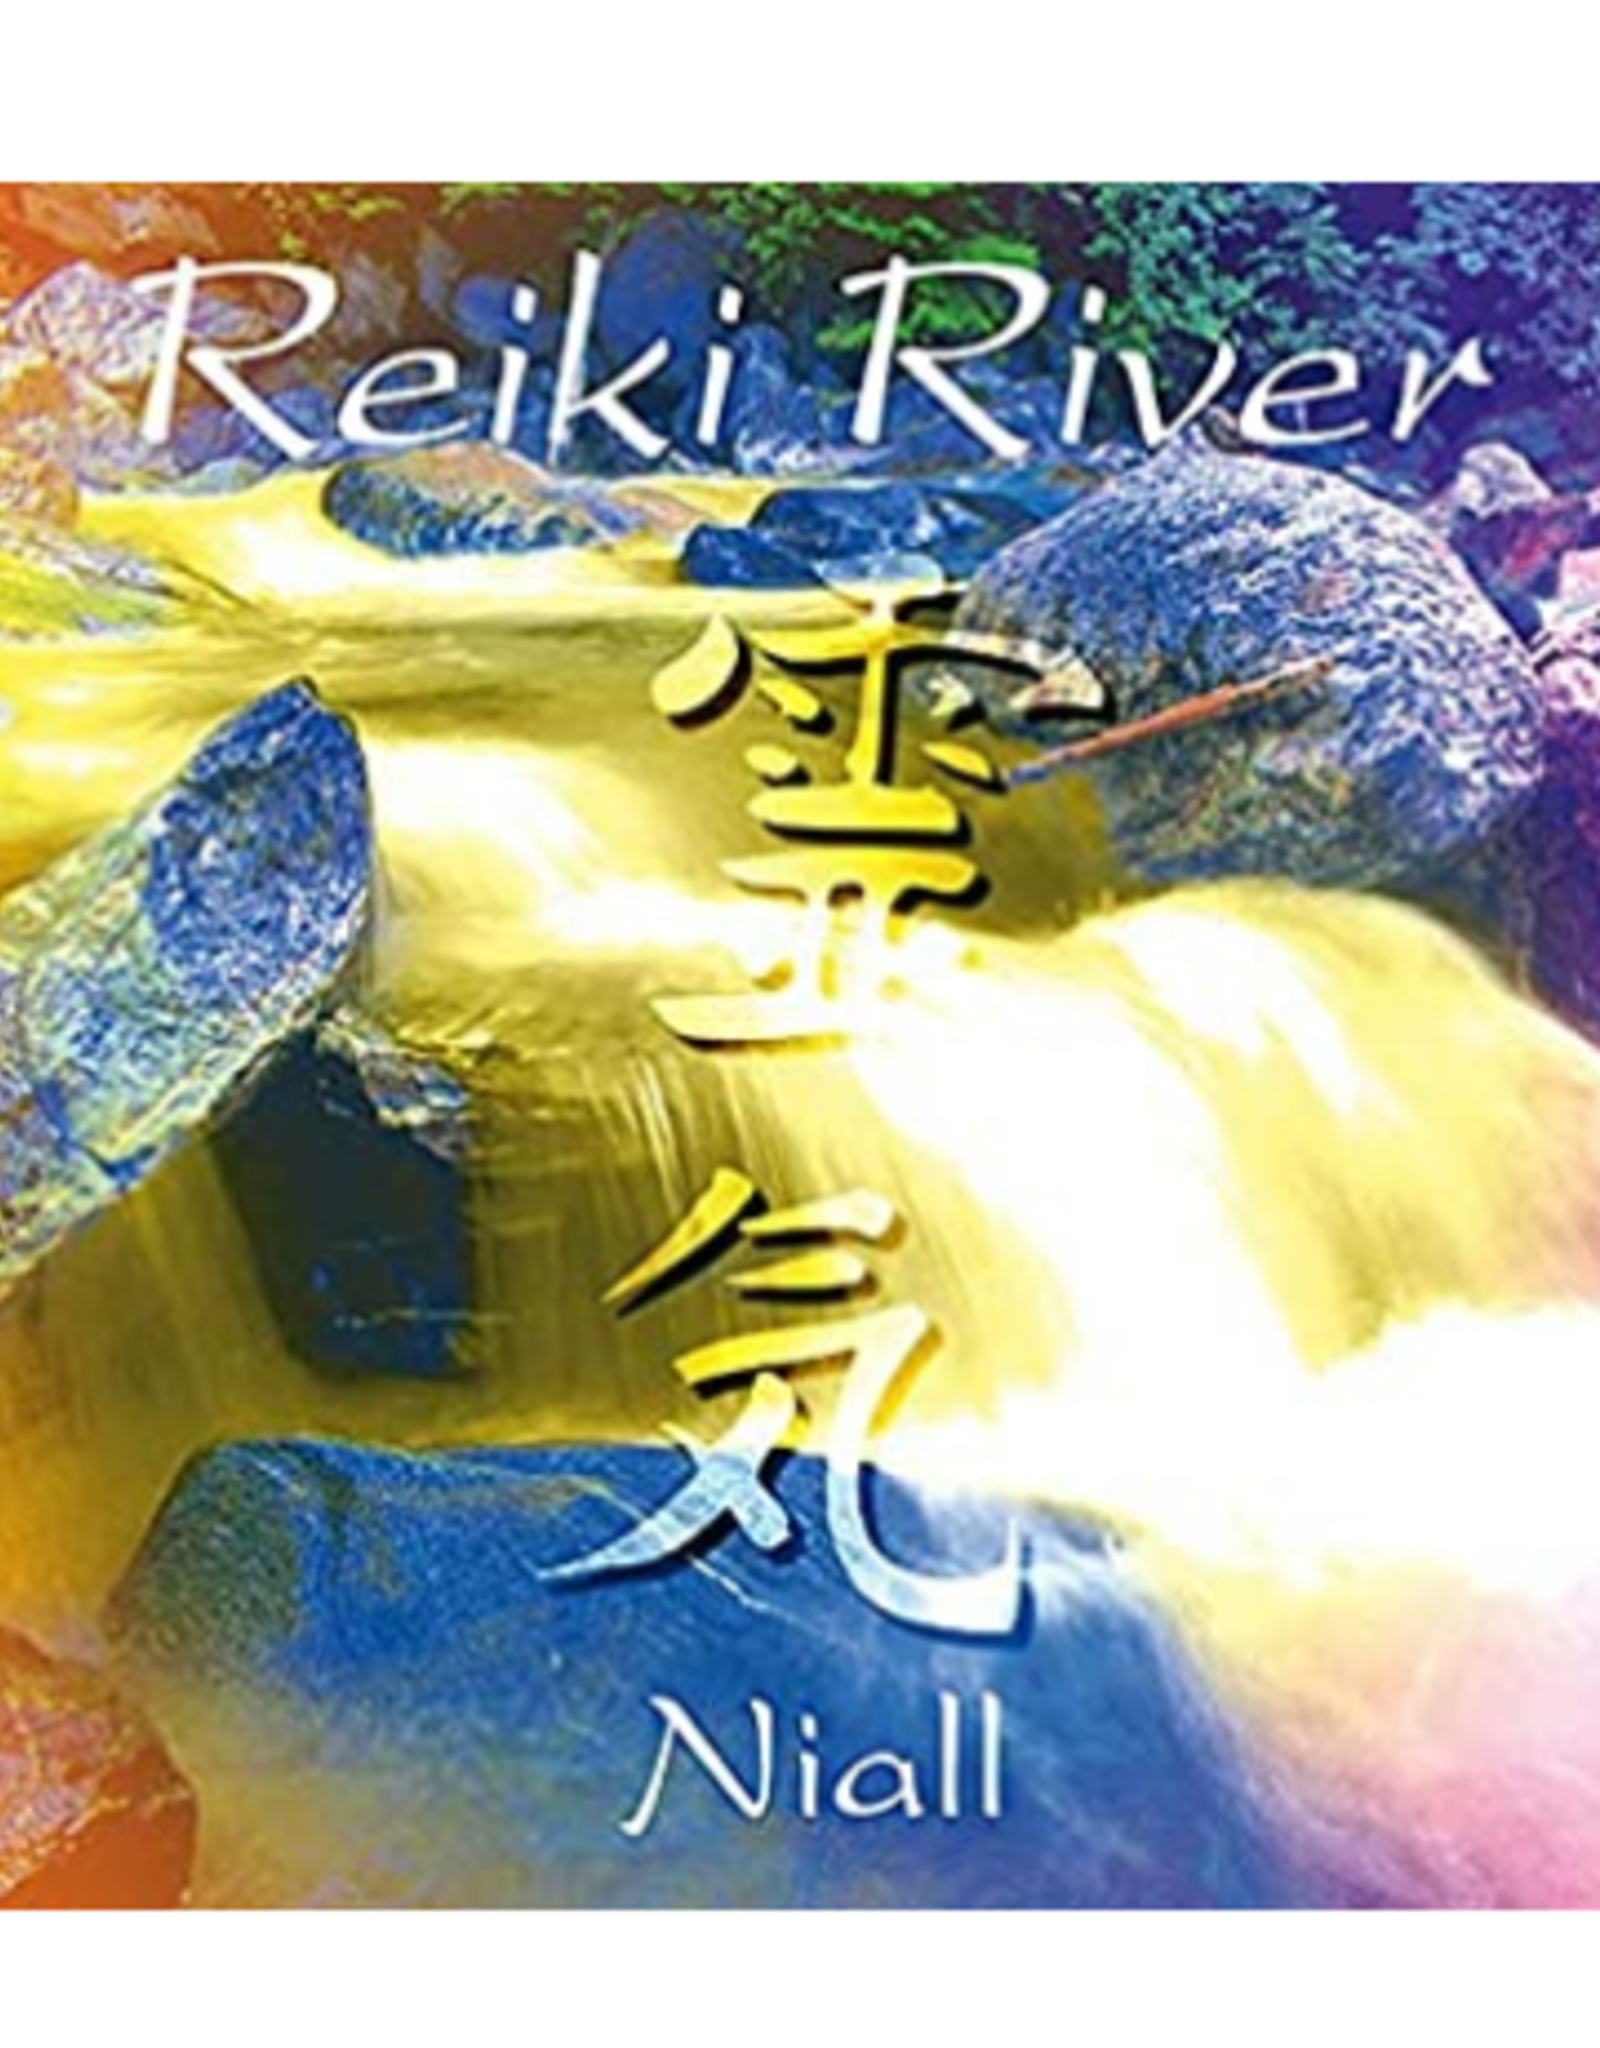 Niall Reiki River CD by Niall